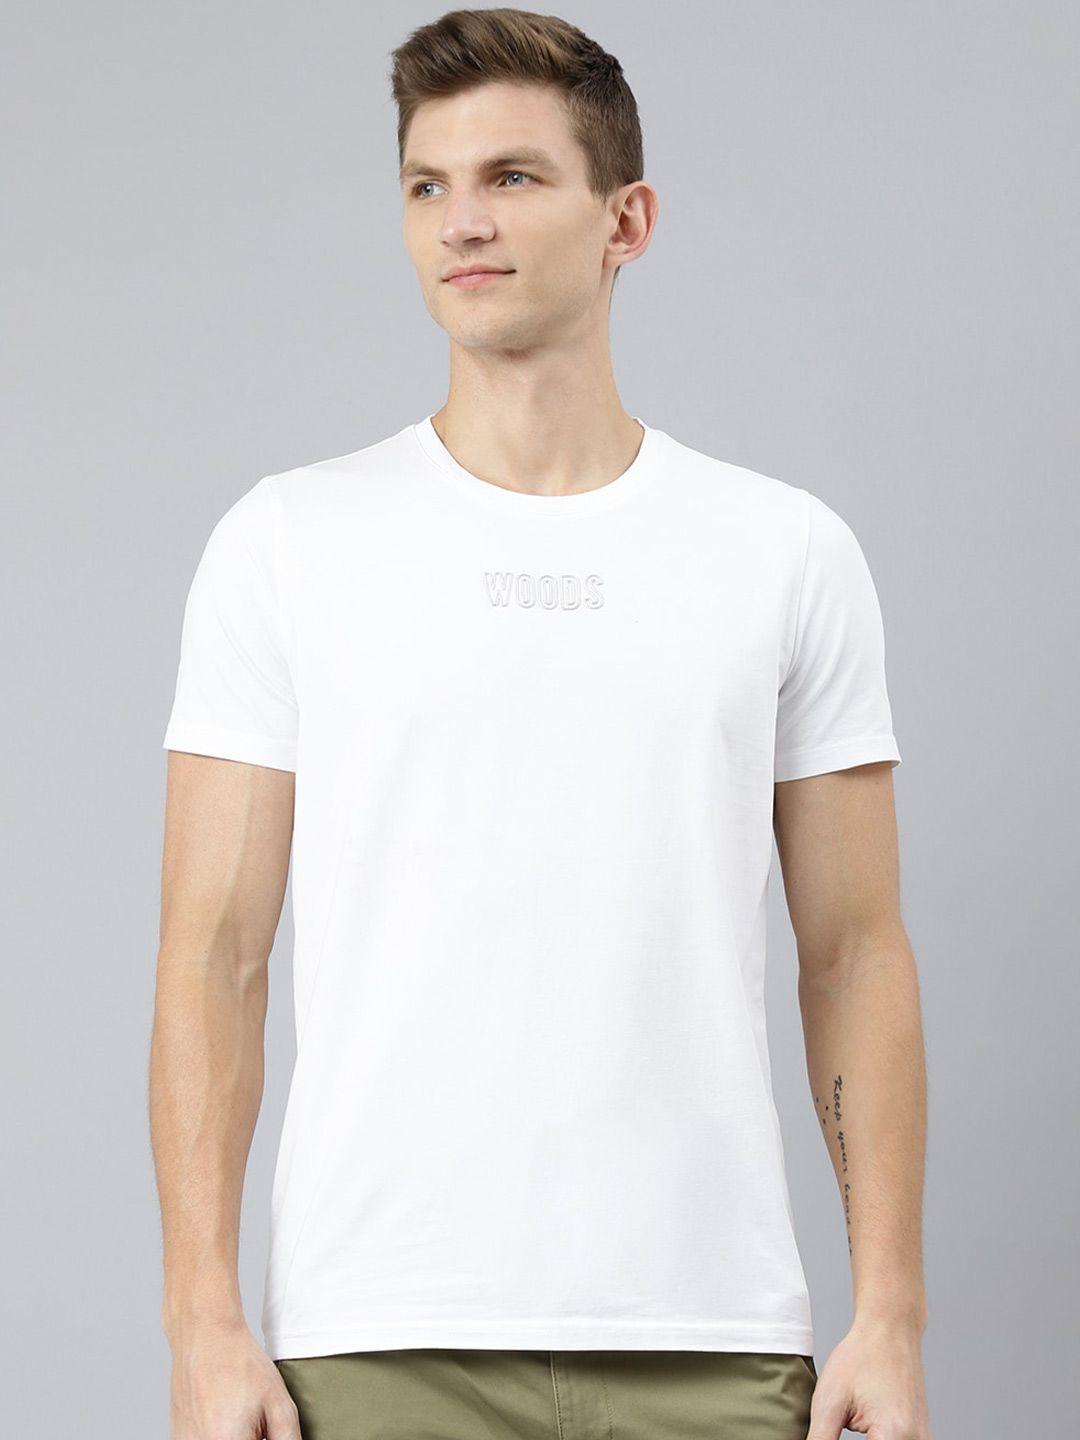 woods men white typography t-shirt